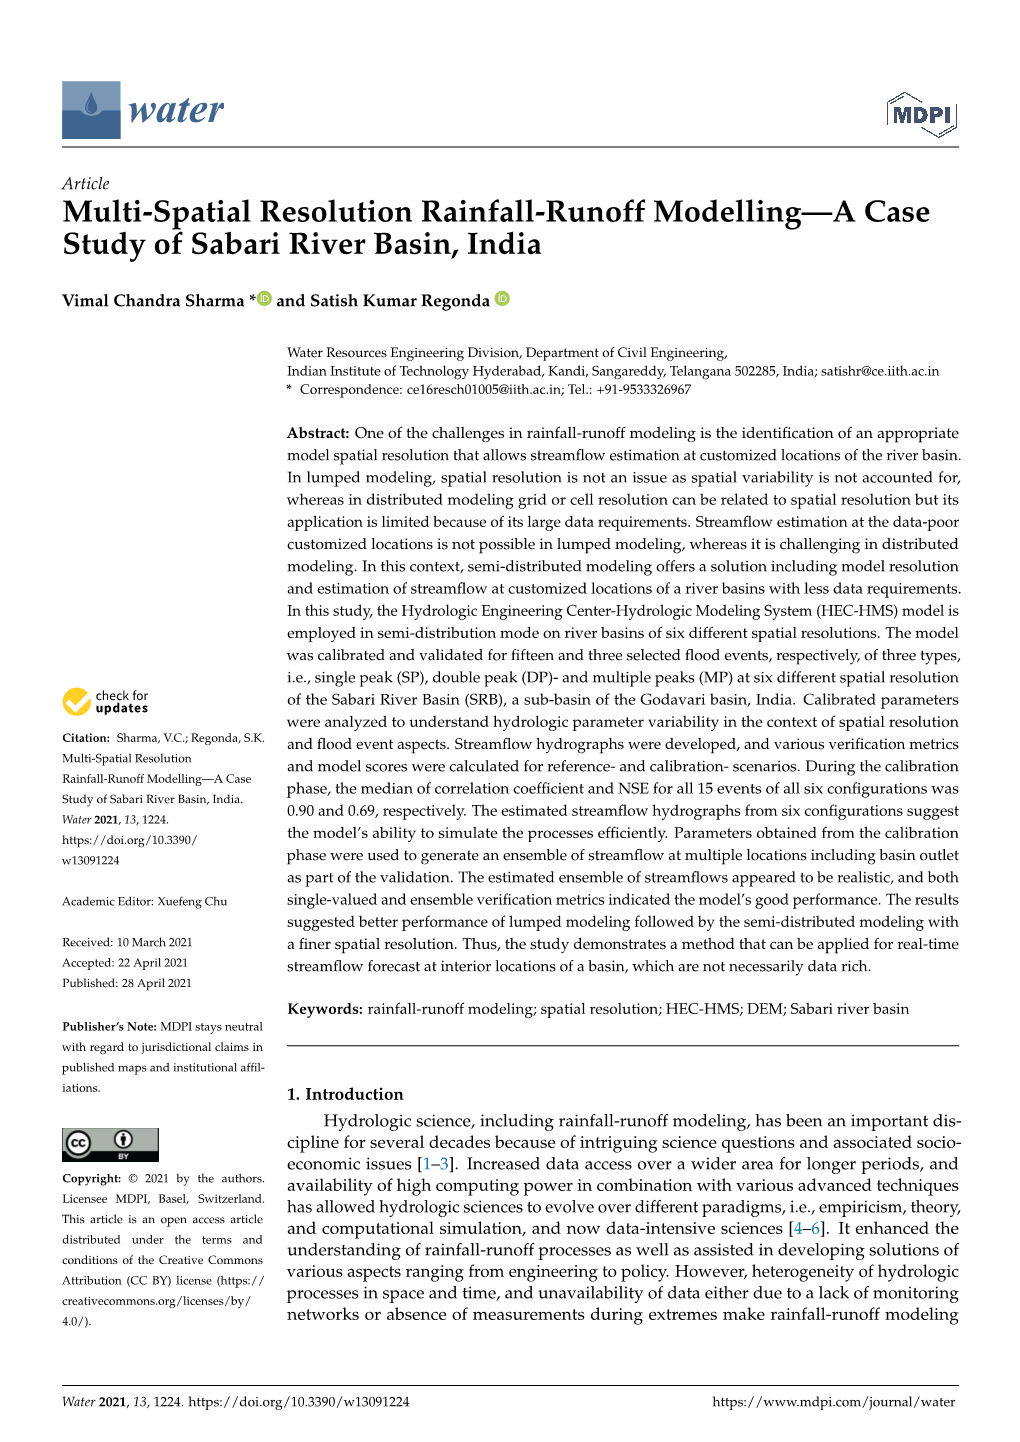 Multi-Spatial Resolution Rainfall-Runoff Modelling—A Case Study of Sabari River Basin, India